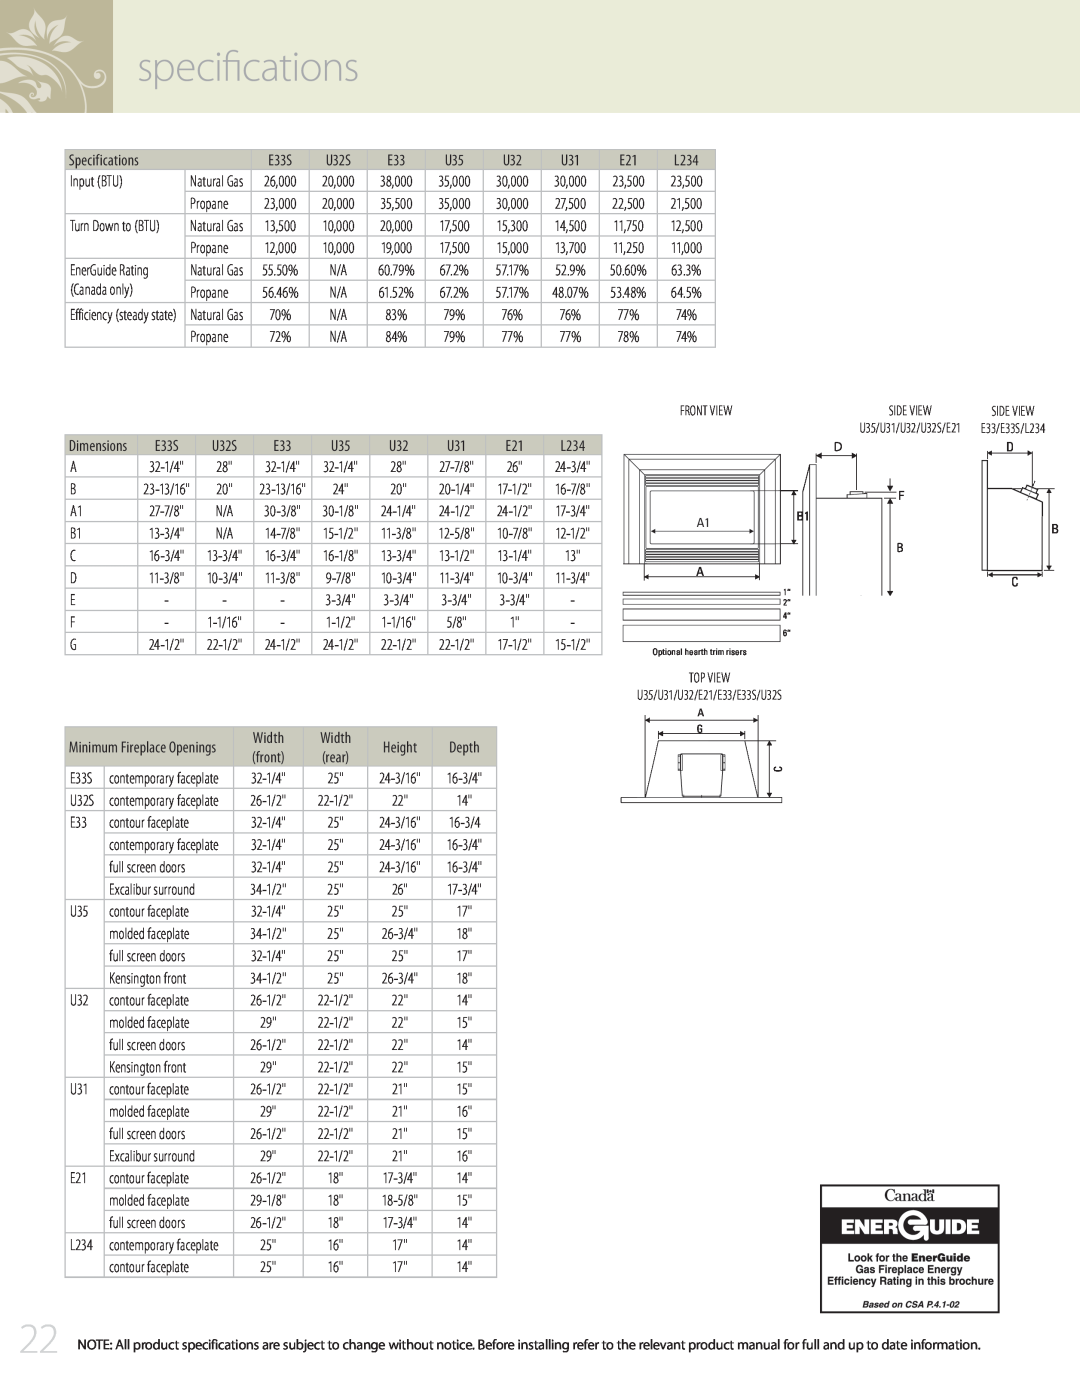 Regency L234, 944-072 manual specifications 